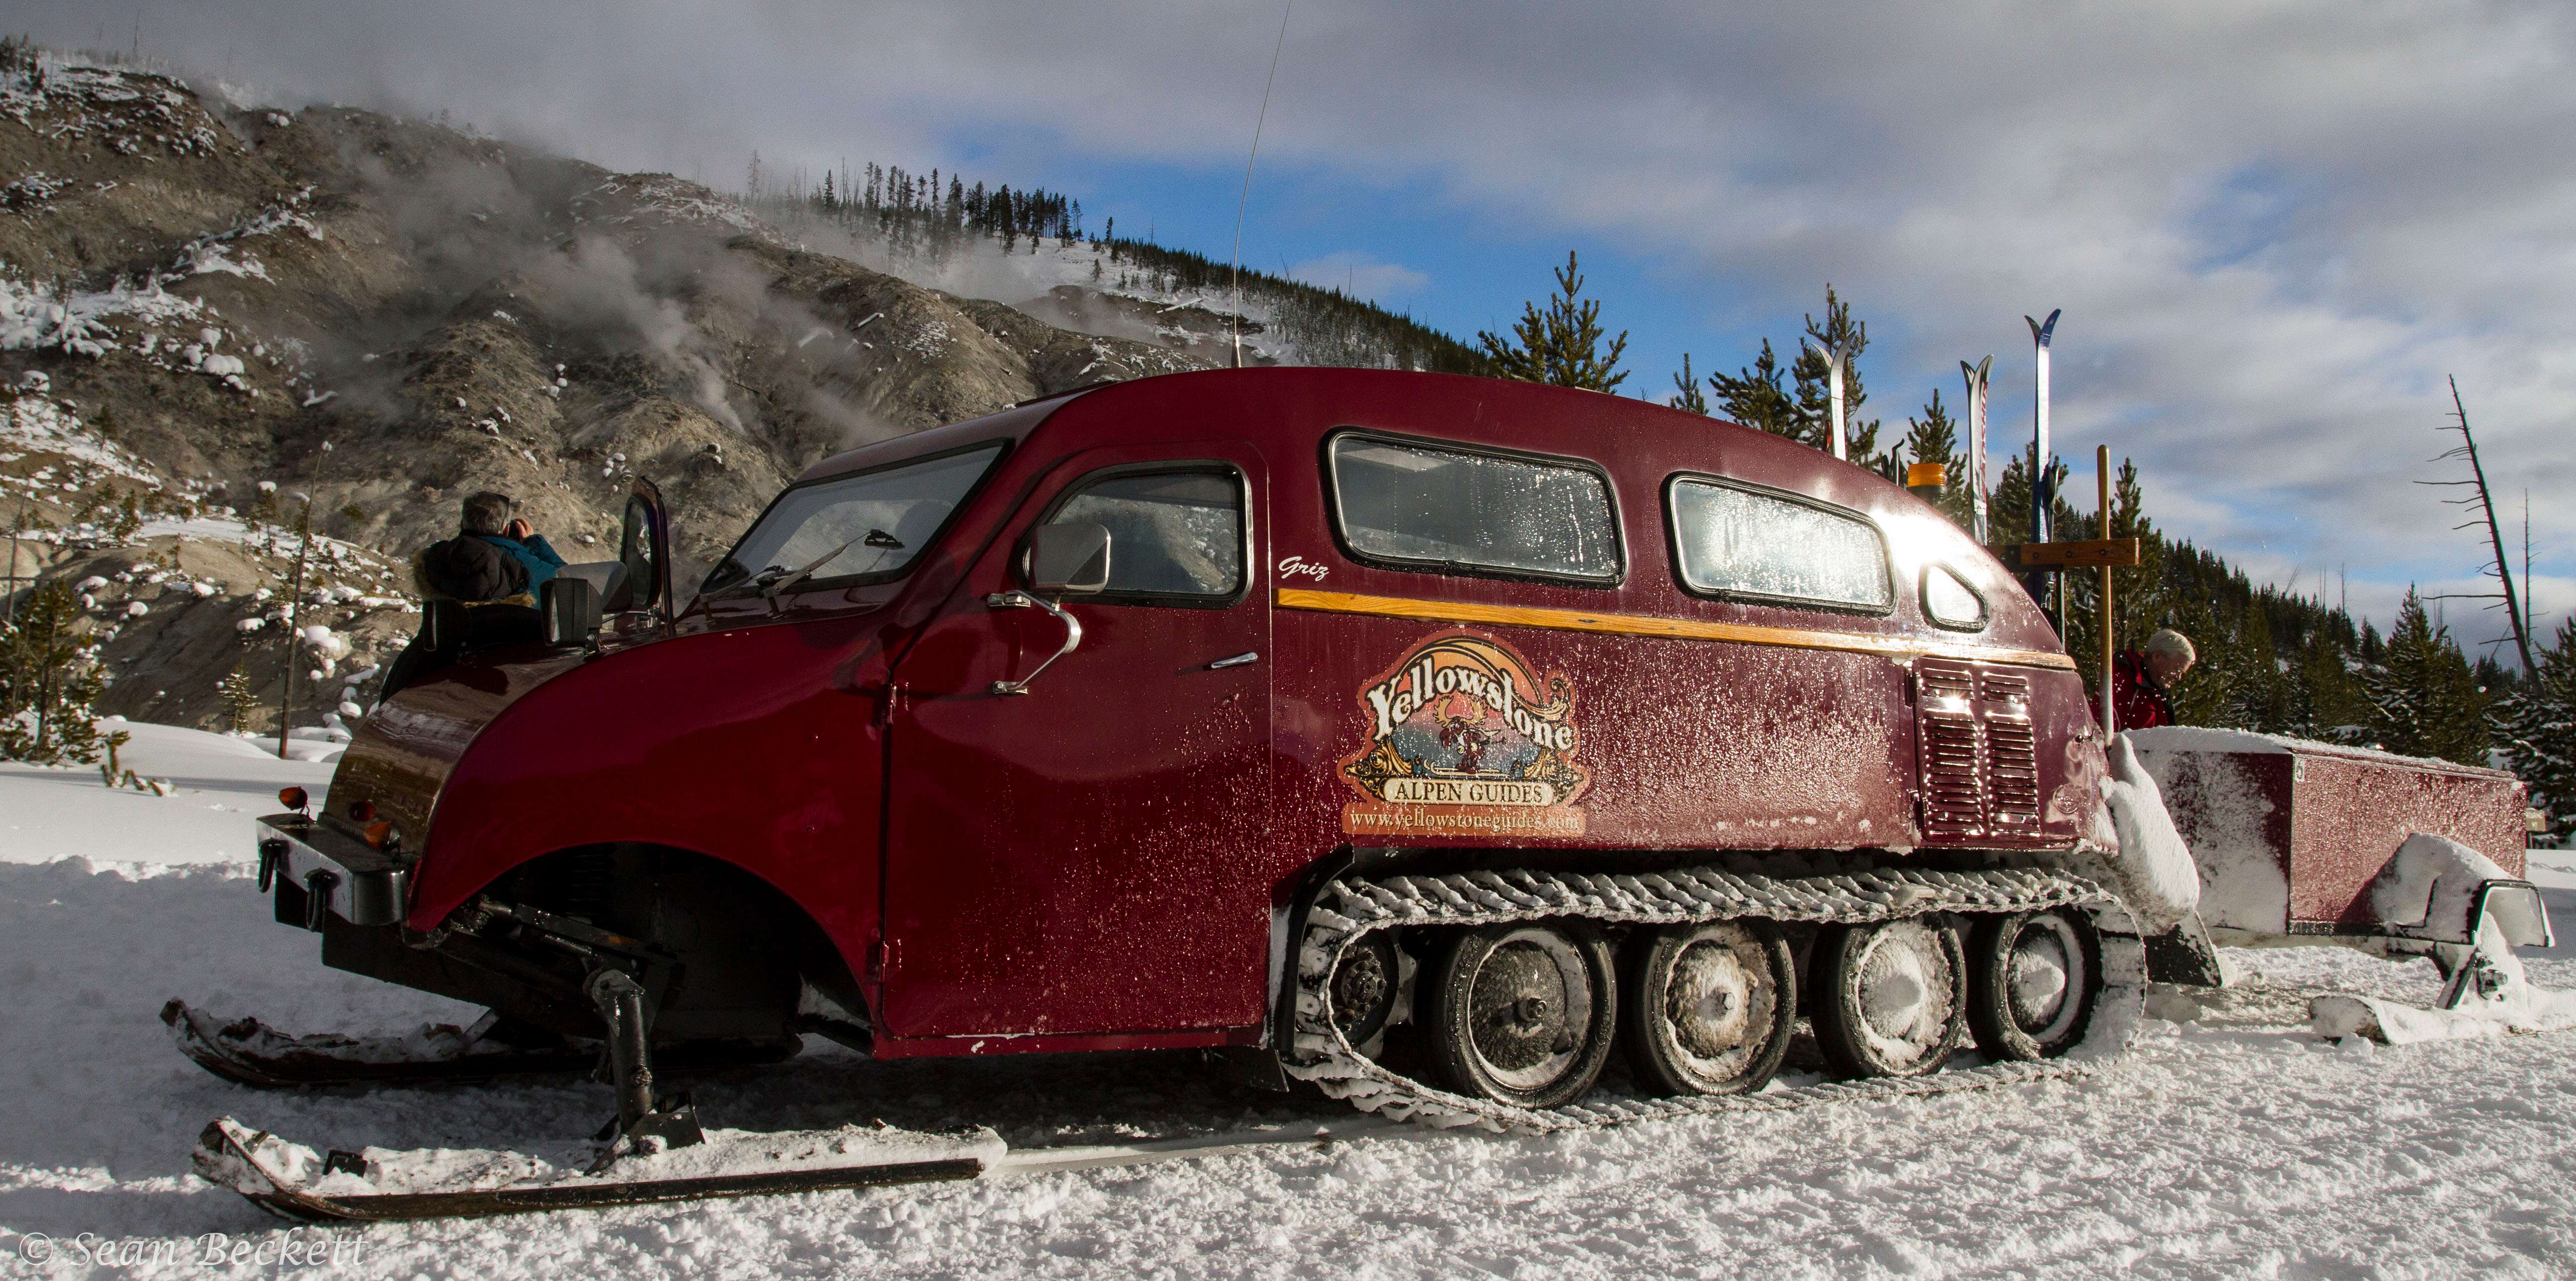 Bombardier snow coach, Yellowstone National Park